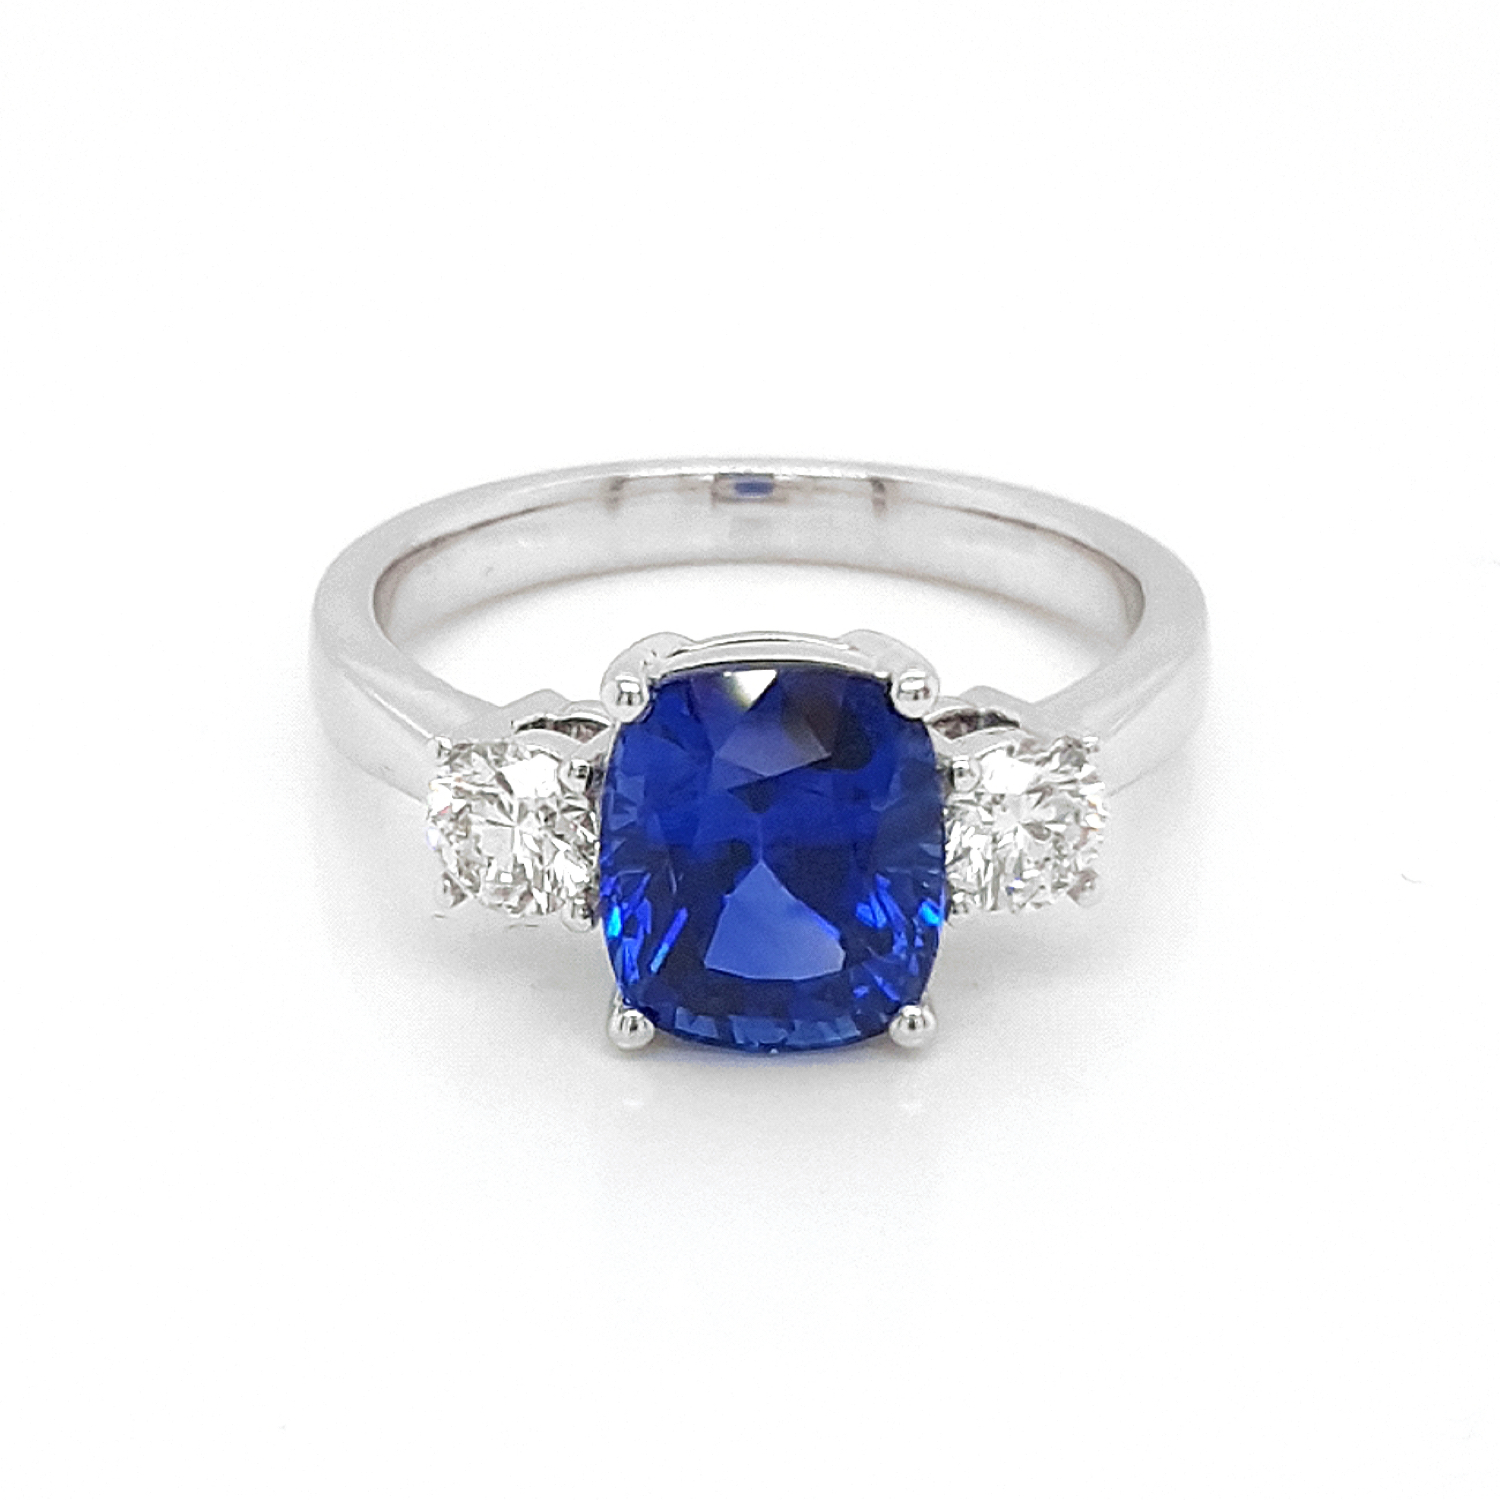 Gemstone Engagement Rings UK | Bespoke Gemstone Engagement Rings